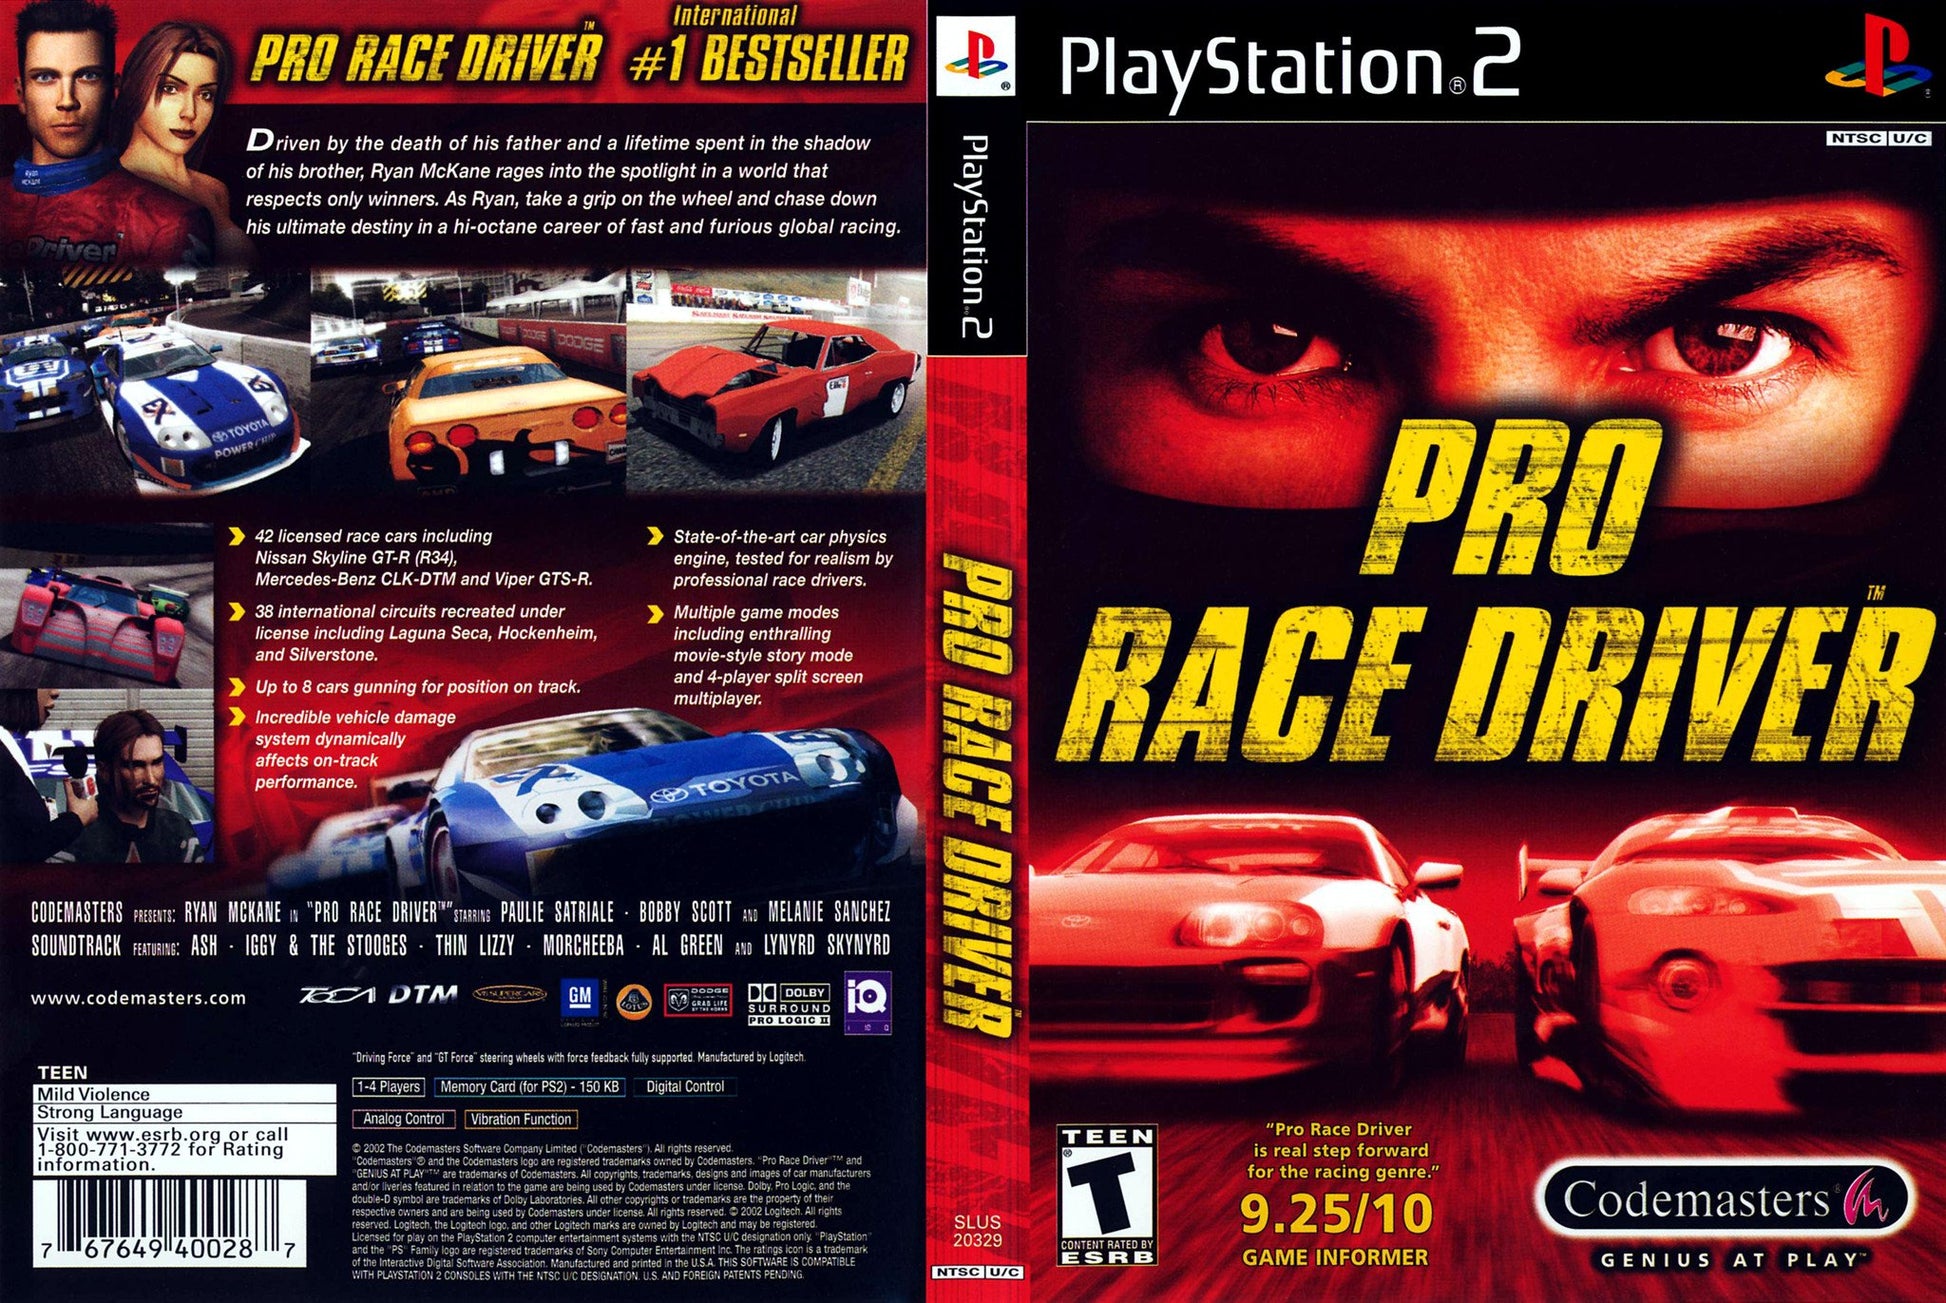 J2Games.com | Pro Race Driver (Playstation 2) (Complete - Good).